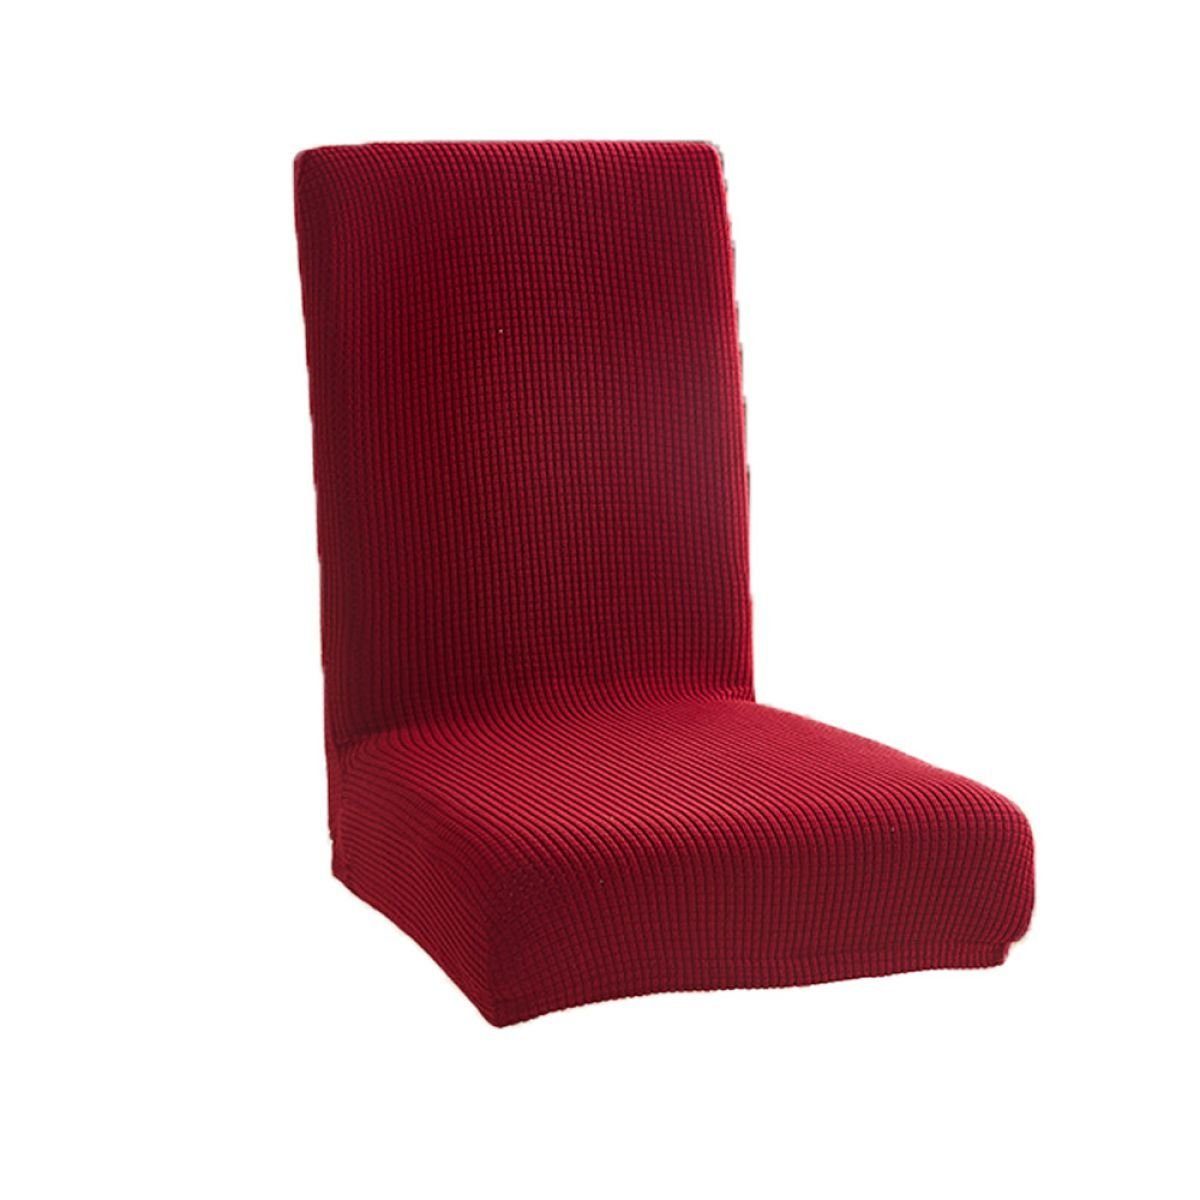 Stuhlbezug Stretch Abnehmbare Waschbar Stuhlbezug für Esszimmerstühle, Juoungle rot